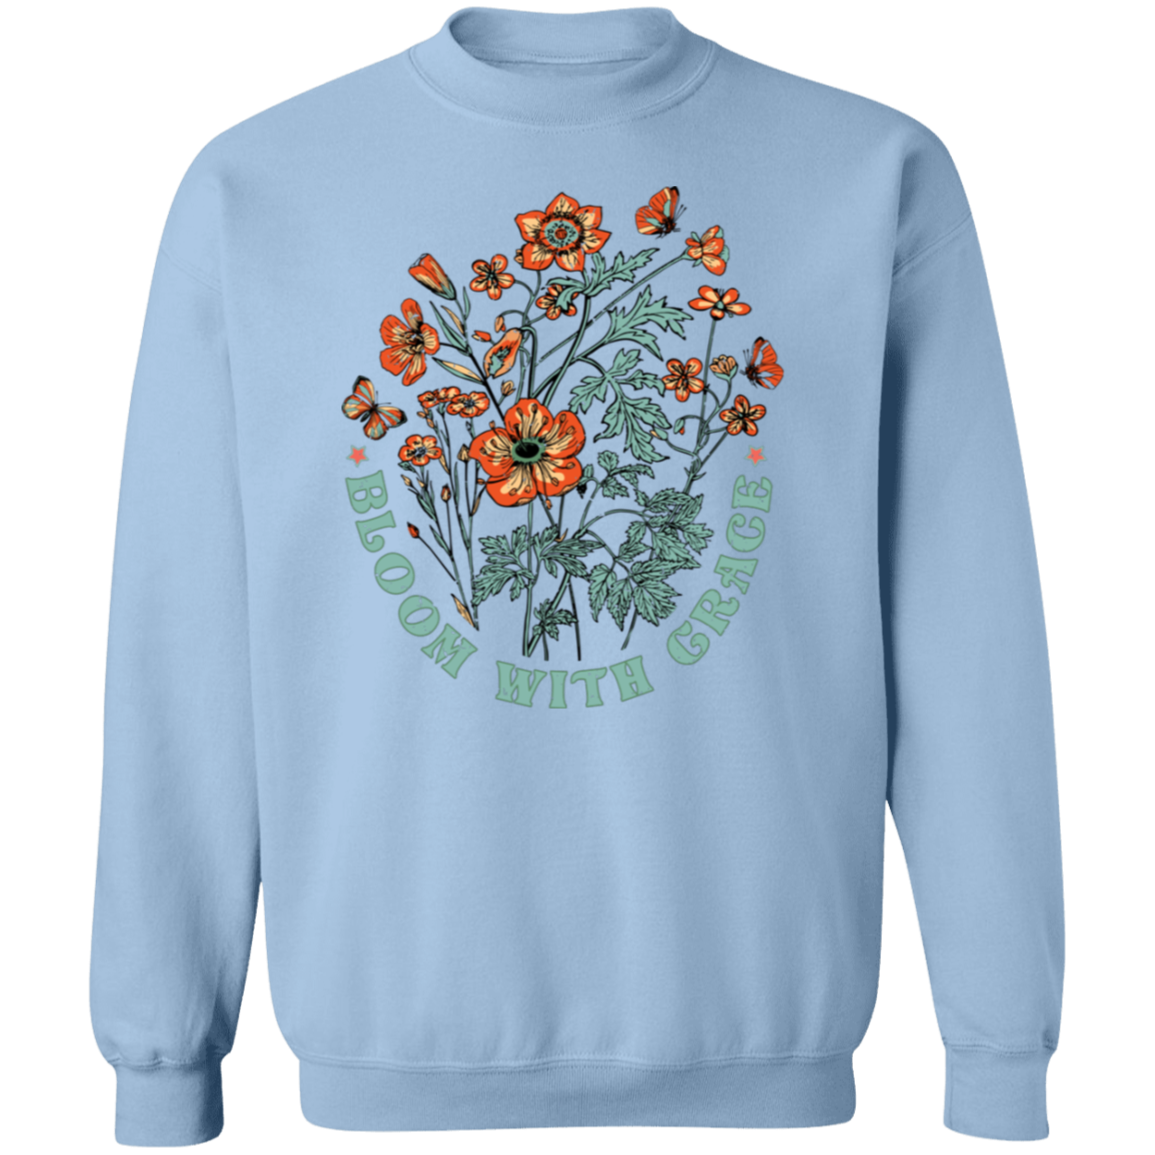 Bloom With Grace Sweatshirt